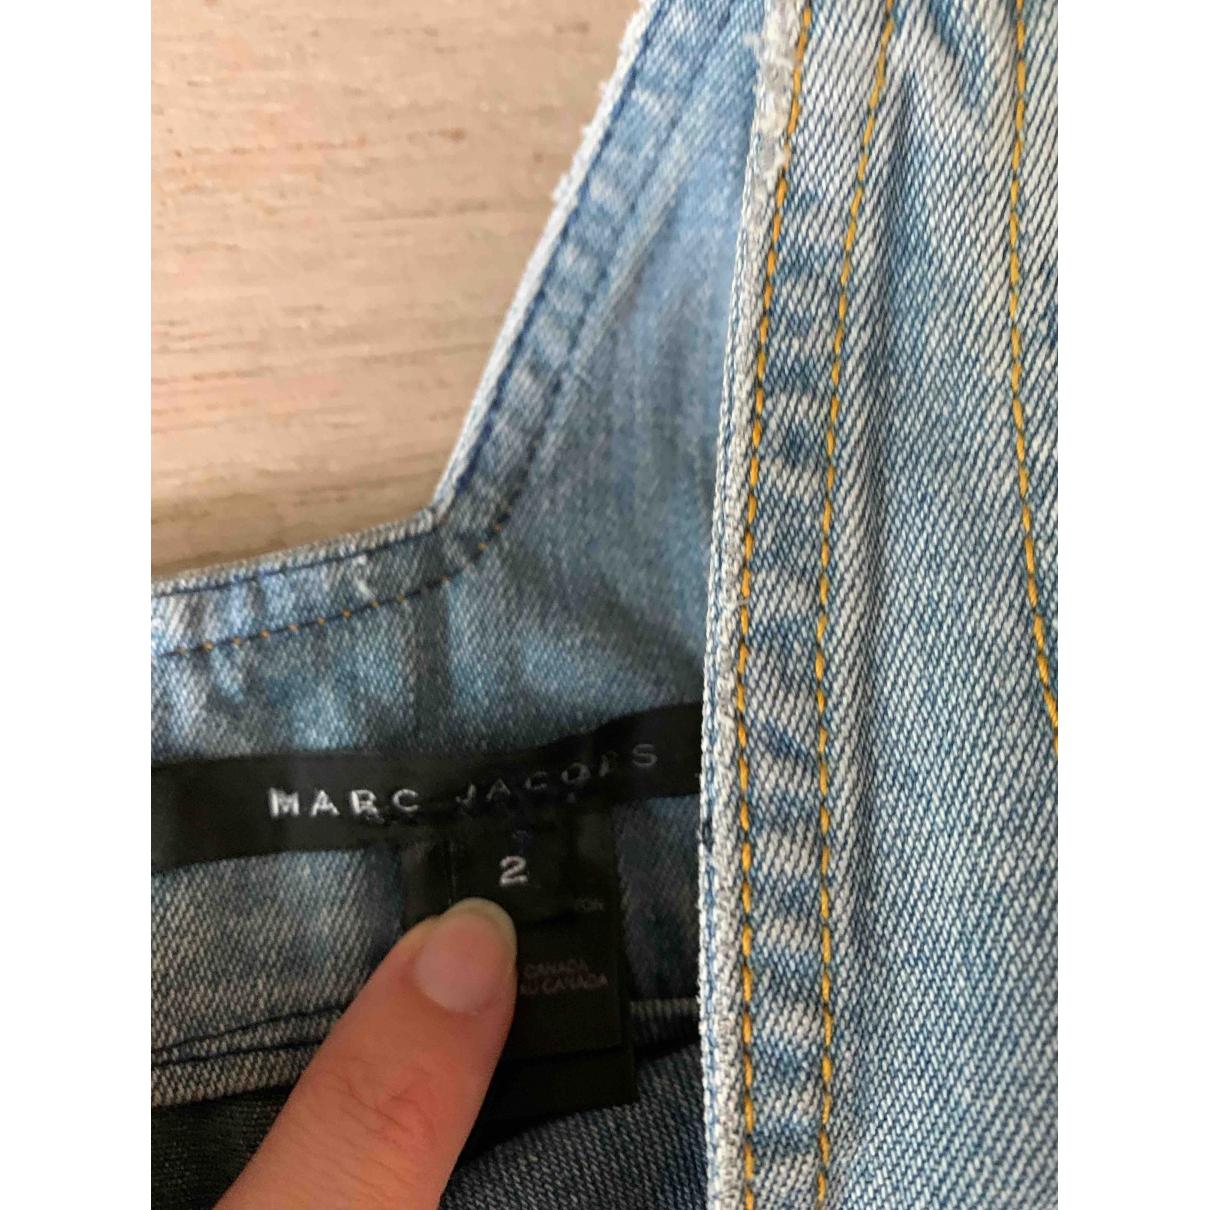 Buy Marc by Marc Jacobs Mini dress online